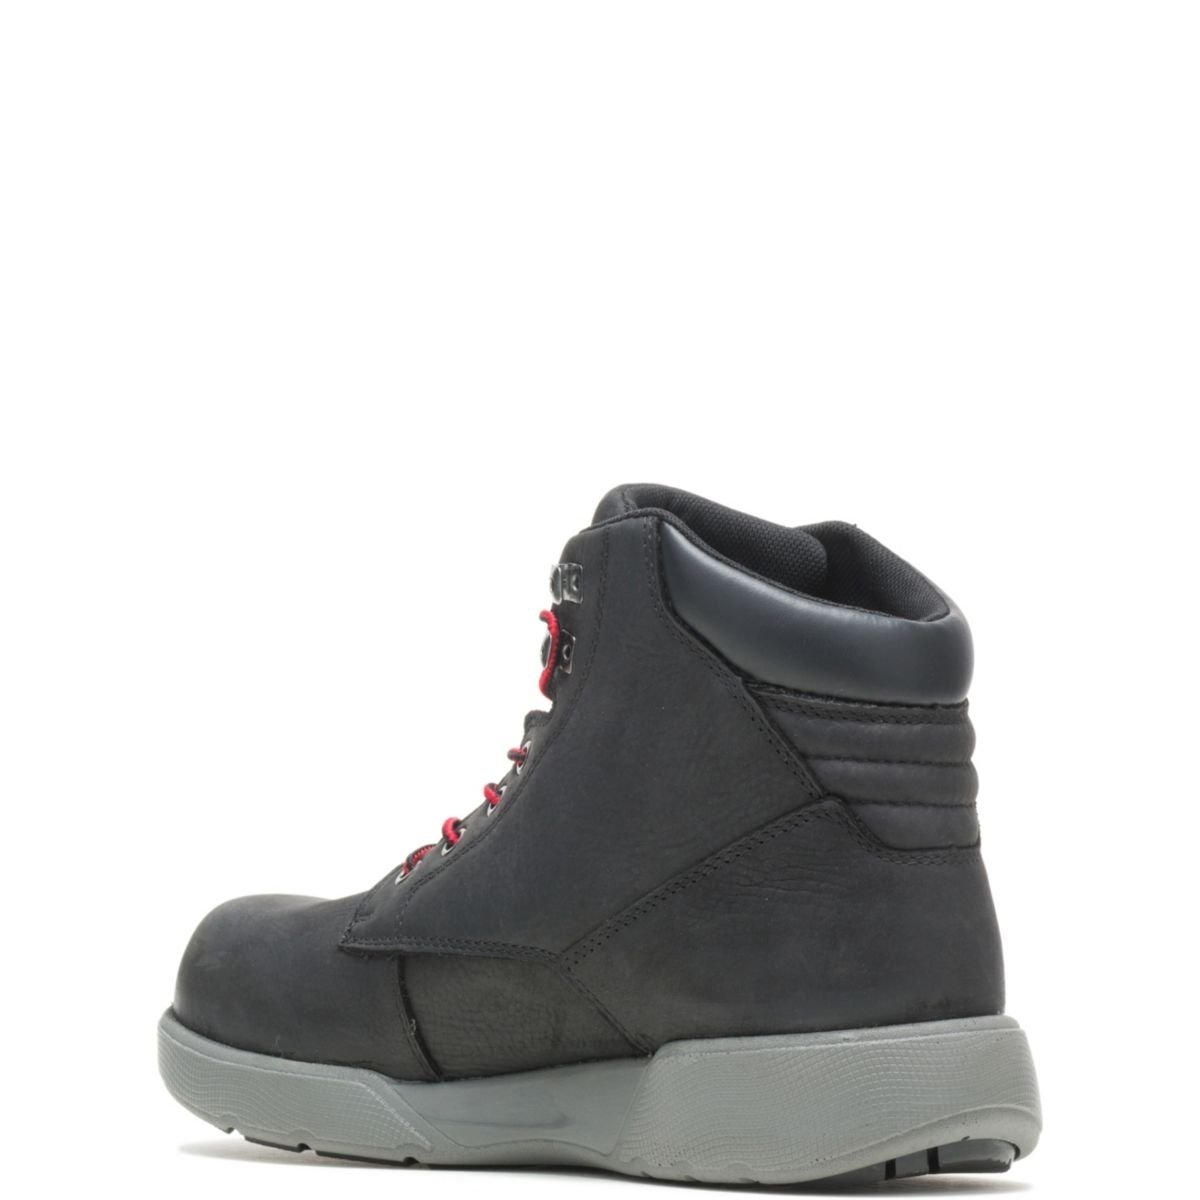 WOLVERINE Men's Kickstart 6 DuraShocksÂ® CarbonMAXÂ® Composite Toe Work Boot Black - W211116 BLACK - BLACK, 11